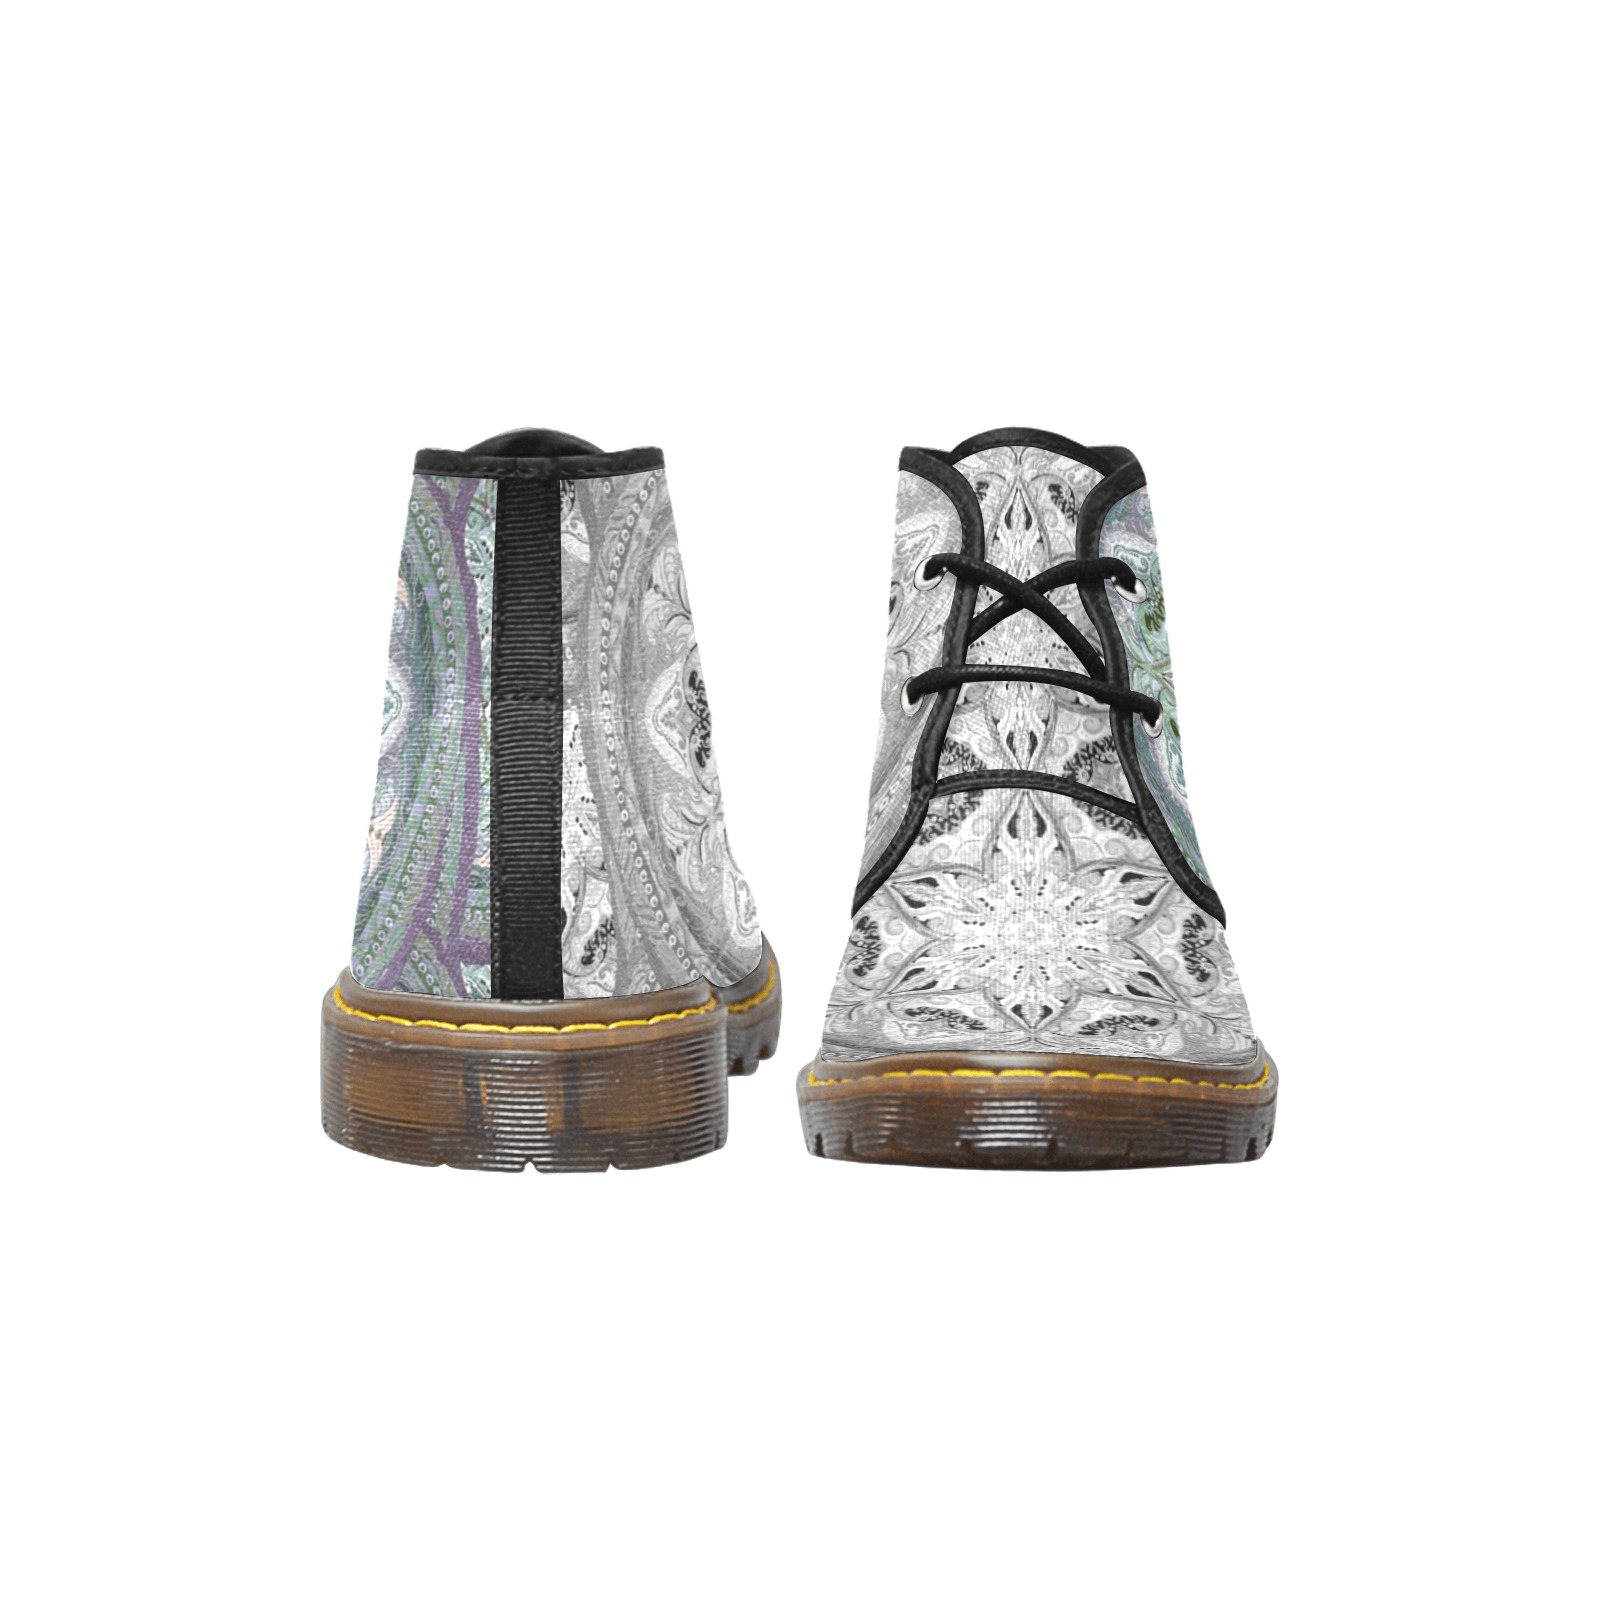 embroidery-gray Women's Canvas Chukka Boots (Model 2402-1)